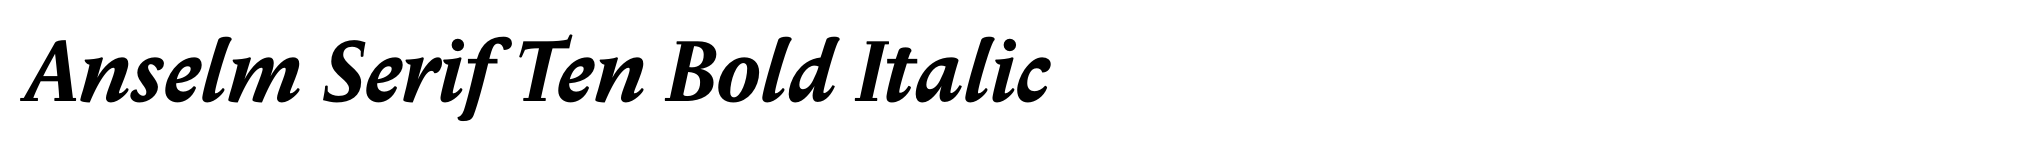 Anselm Serif Ten Bold Italic image